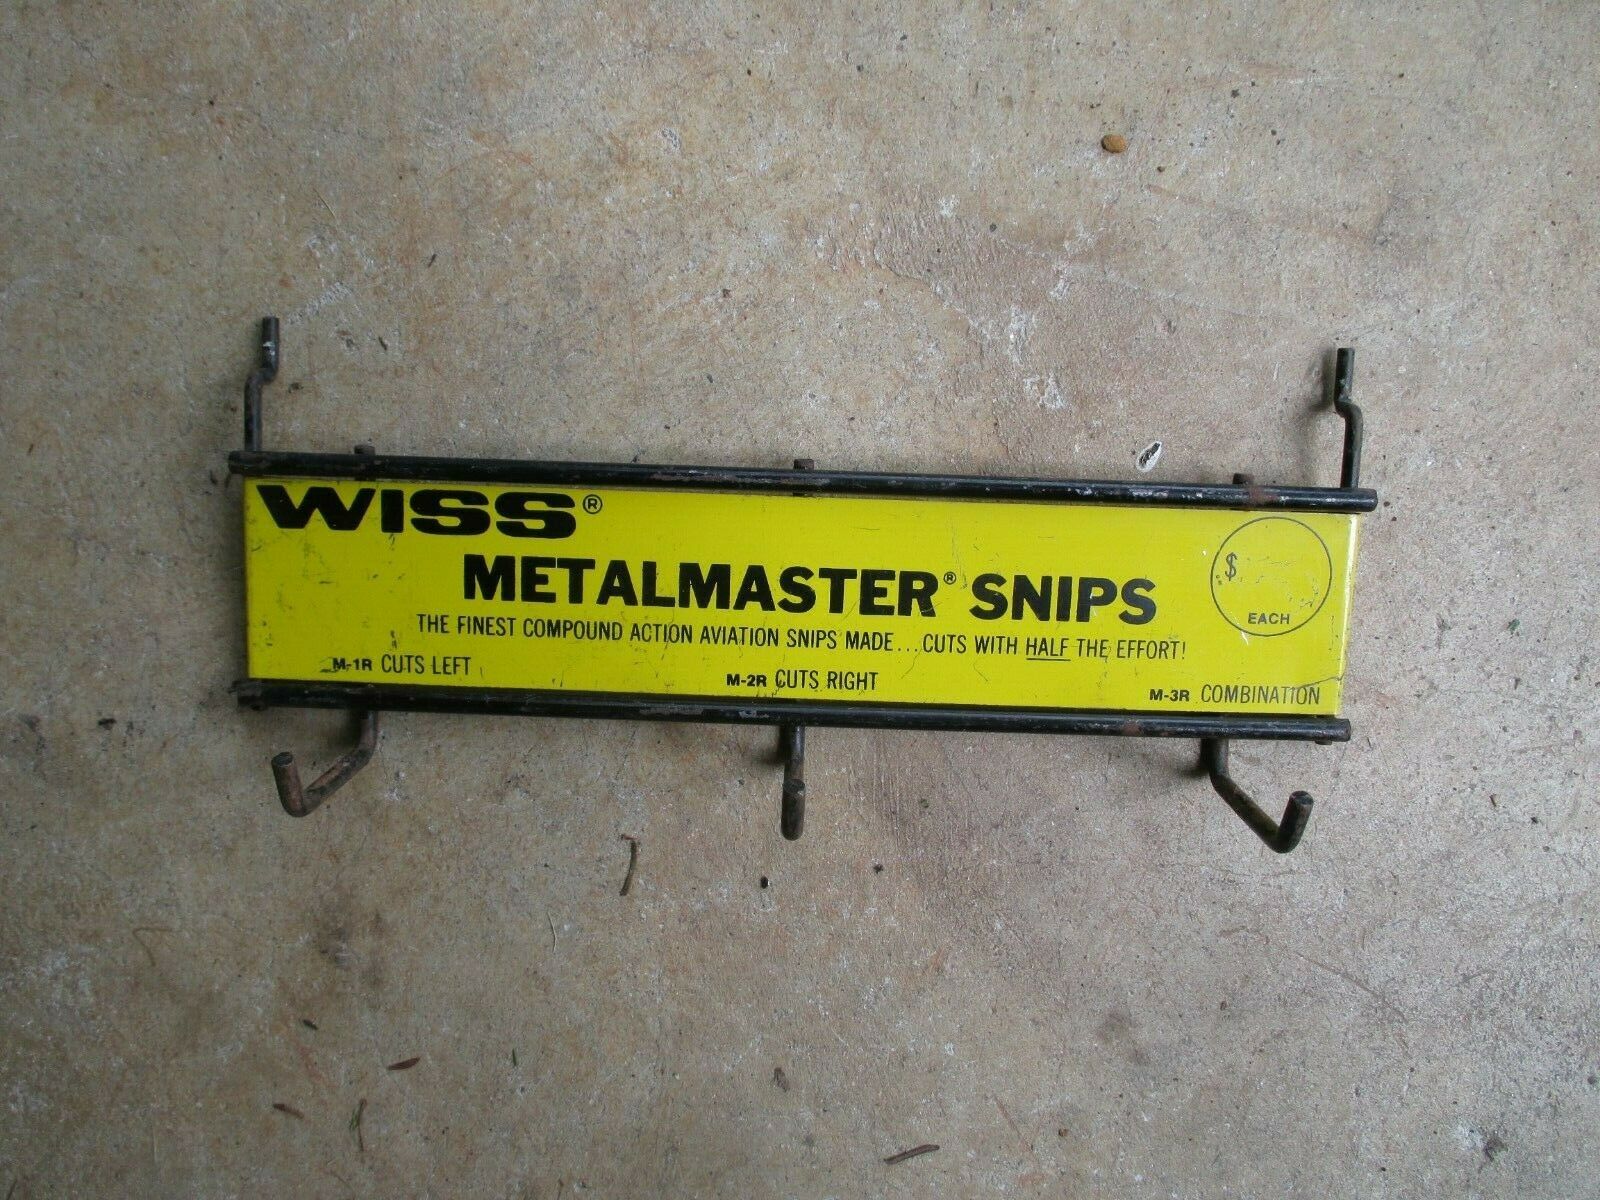 Vintage WISS METALMASTER SNIPS Hardware Store Tool Display Rack